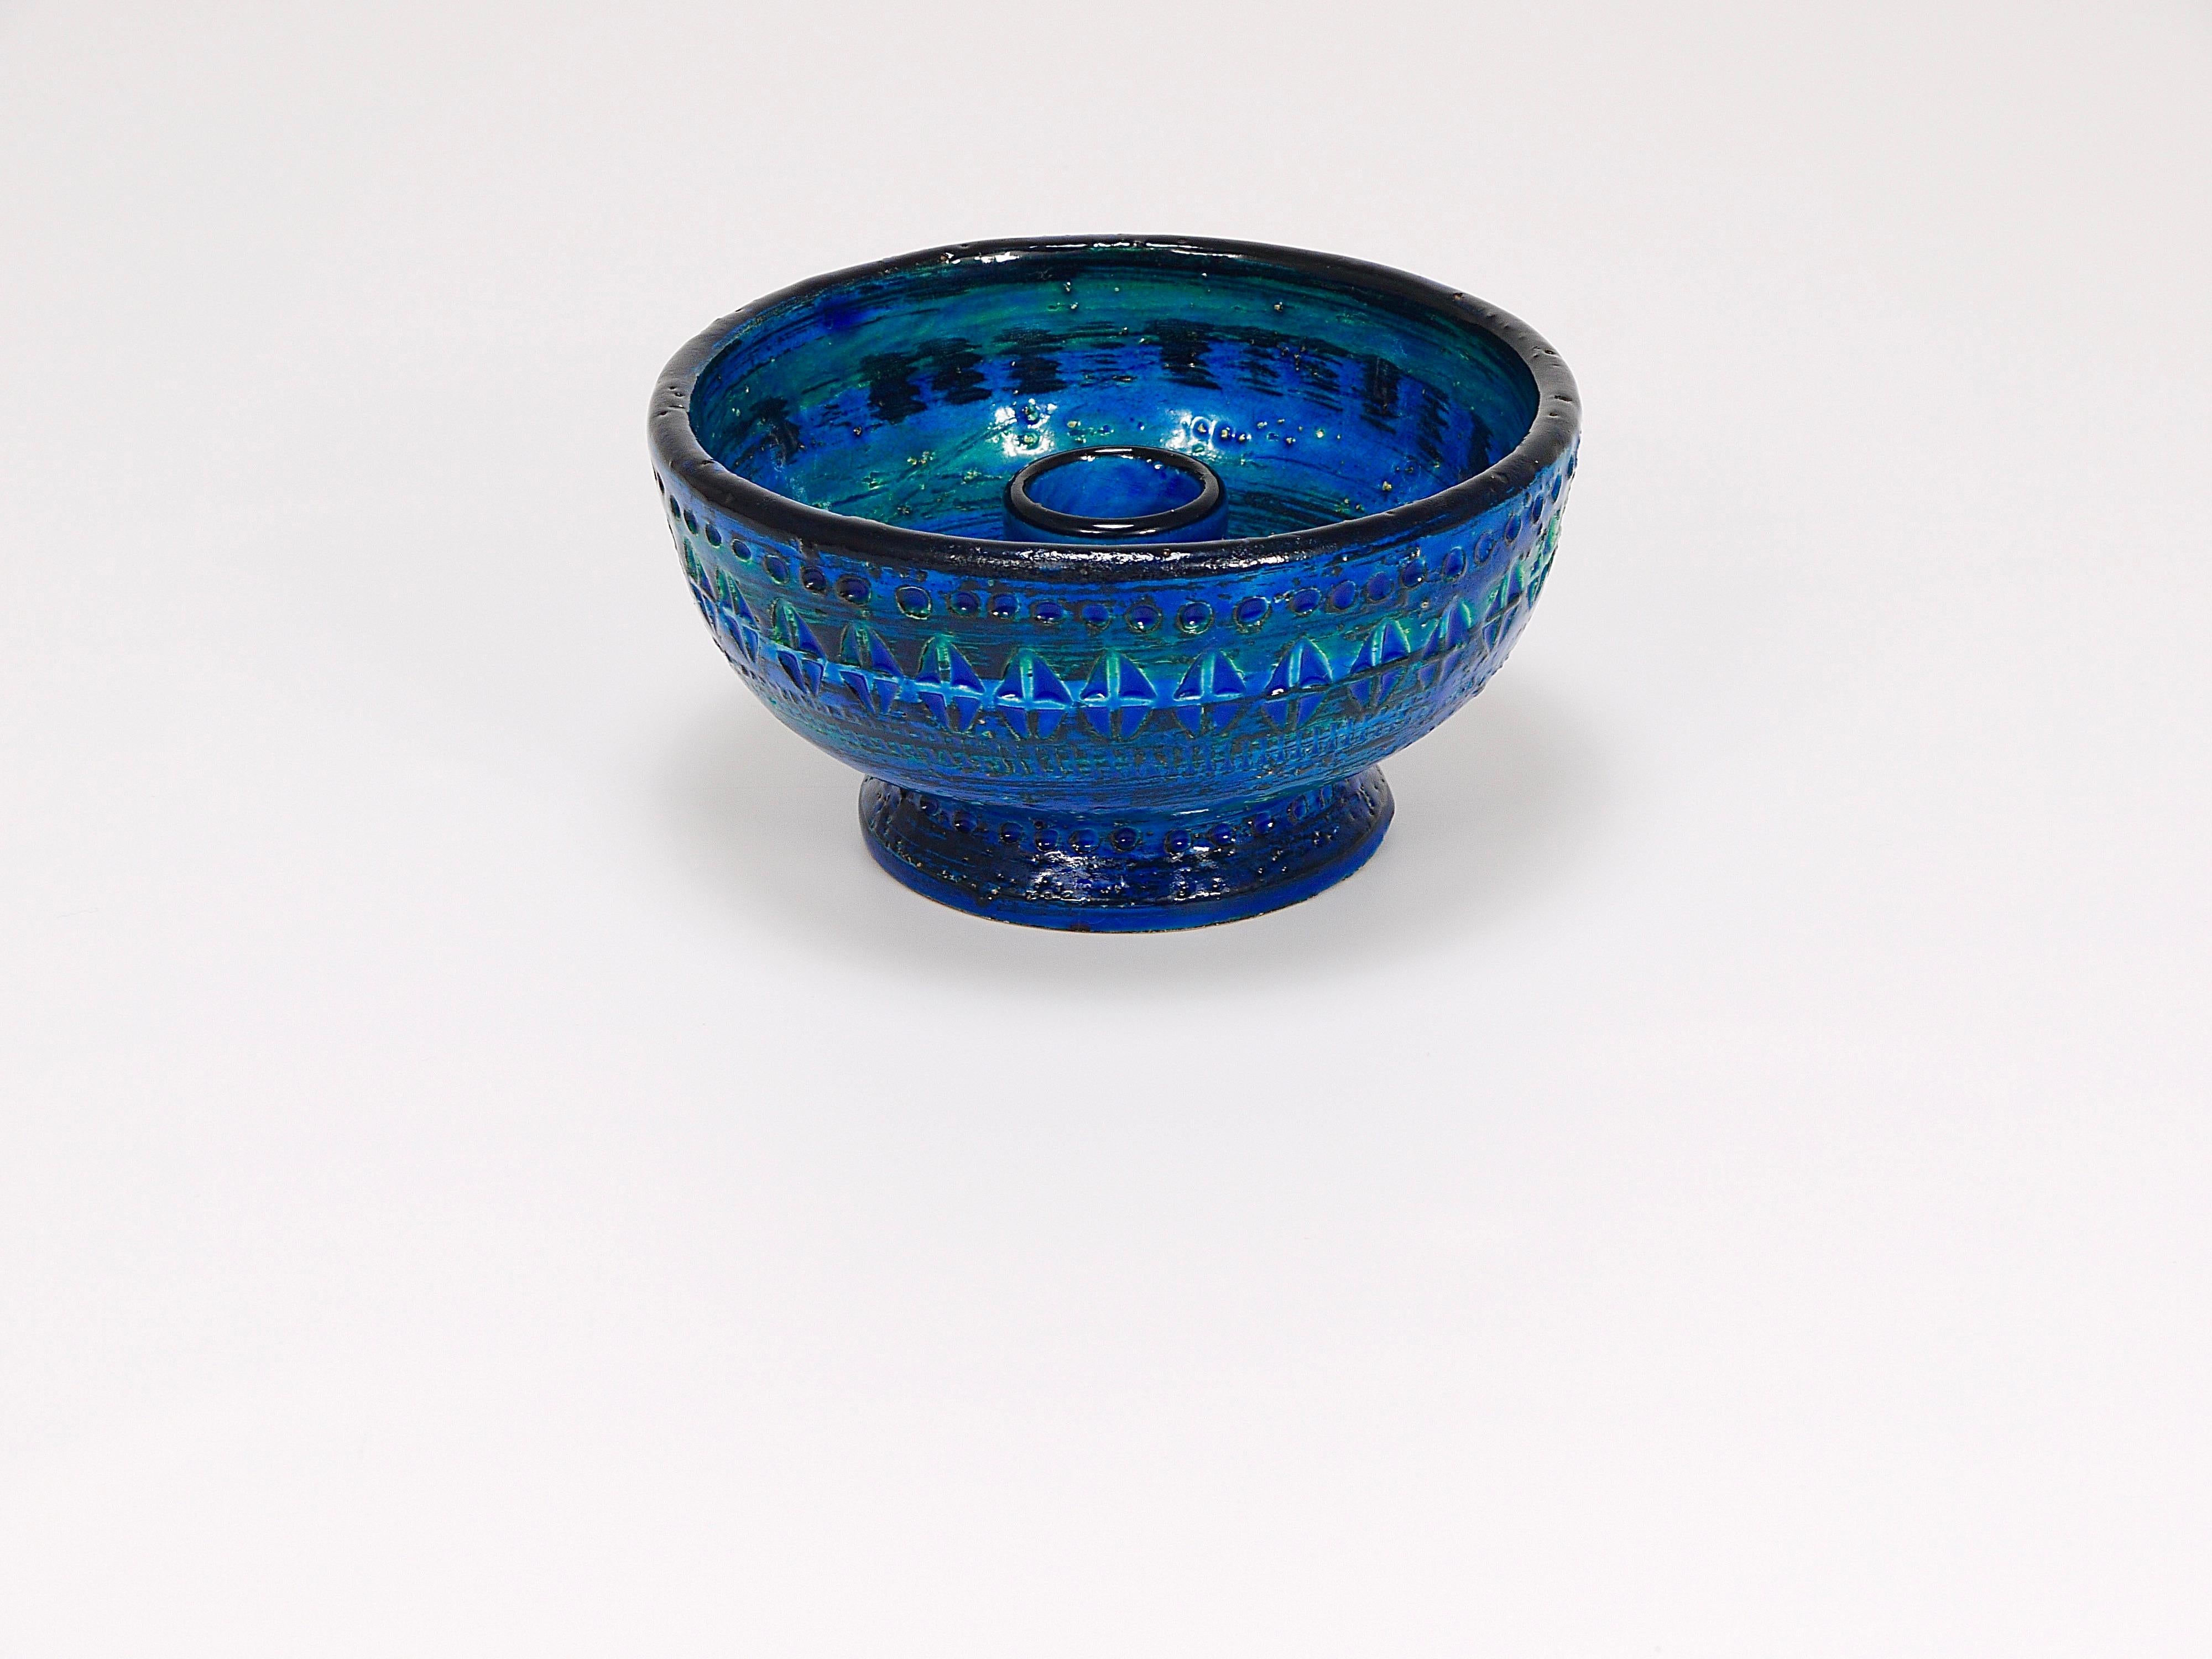 Ceramic Aldo Londi Bitossi Rimini Blue Glazed Midcentury Candle Holder Bowl, 1950s For Sale